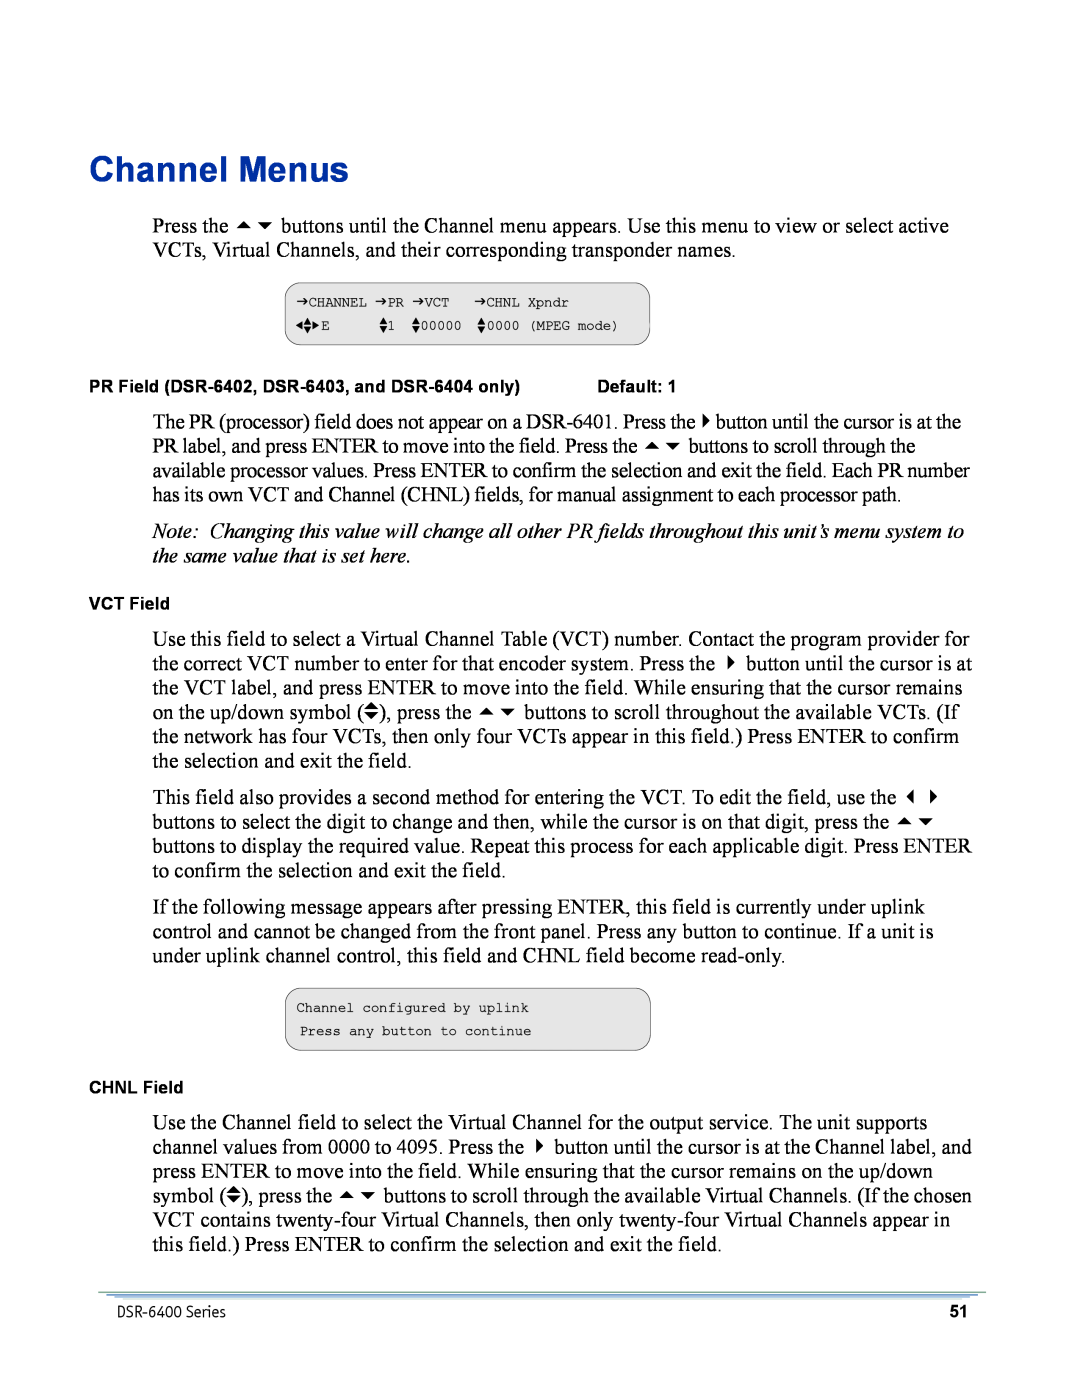 Motorola DSR-6400 manual Channel Menus, PR Field DSR-6402, DSR-6403,and DSR-6404only, Default, VCT Field, CHNL Field 